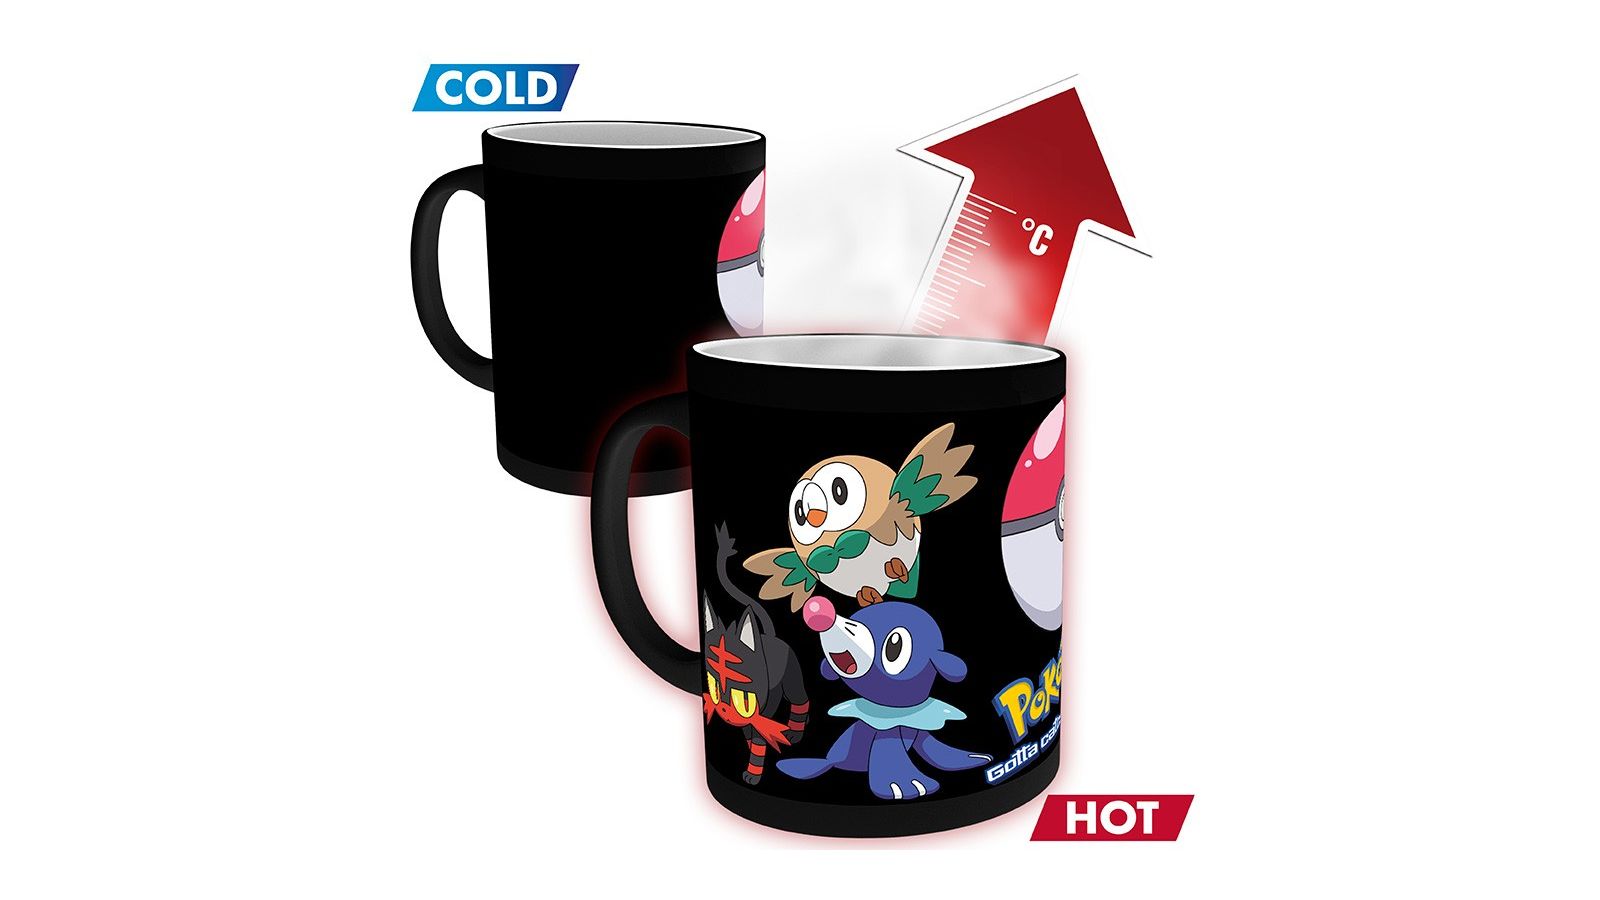 Mug Pokémon - Attrapez-les tous - Thermoréactif